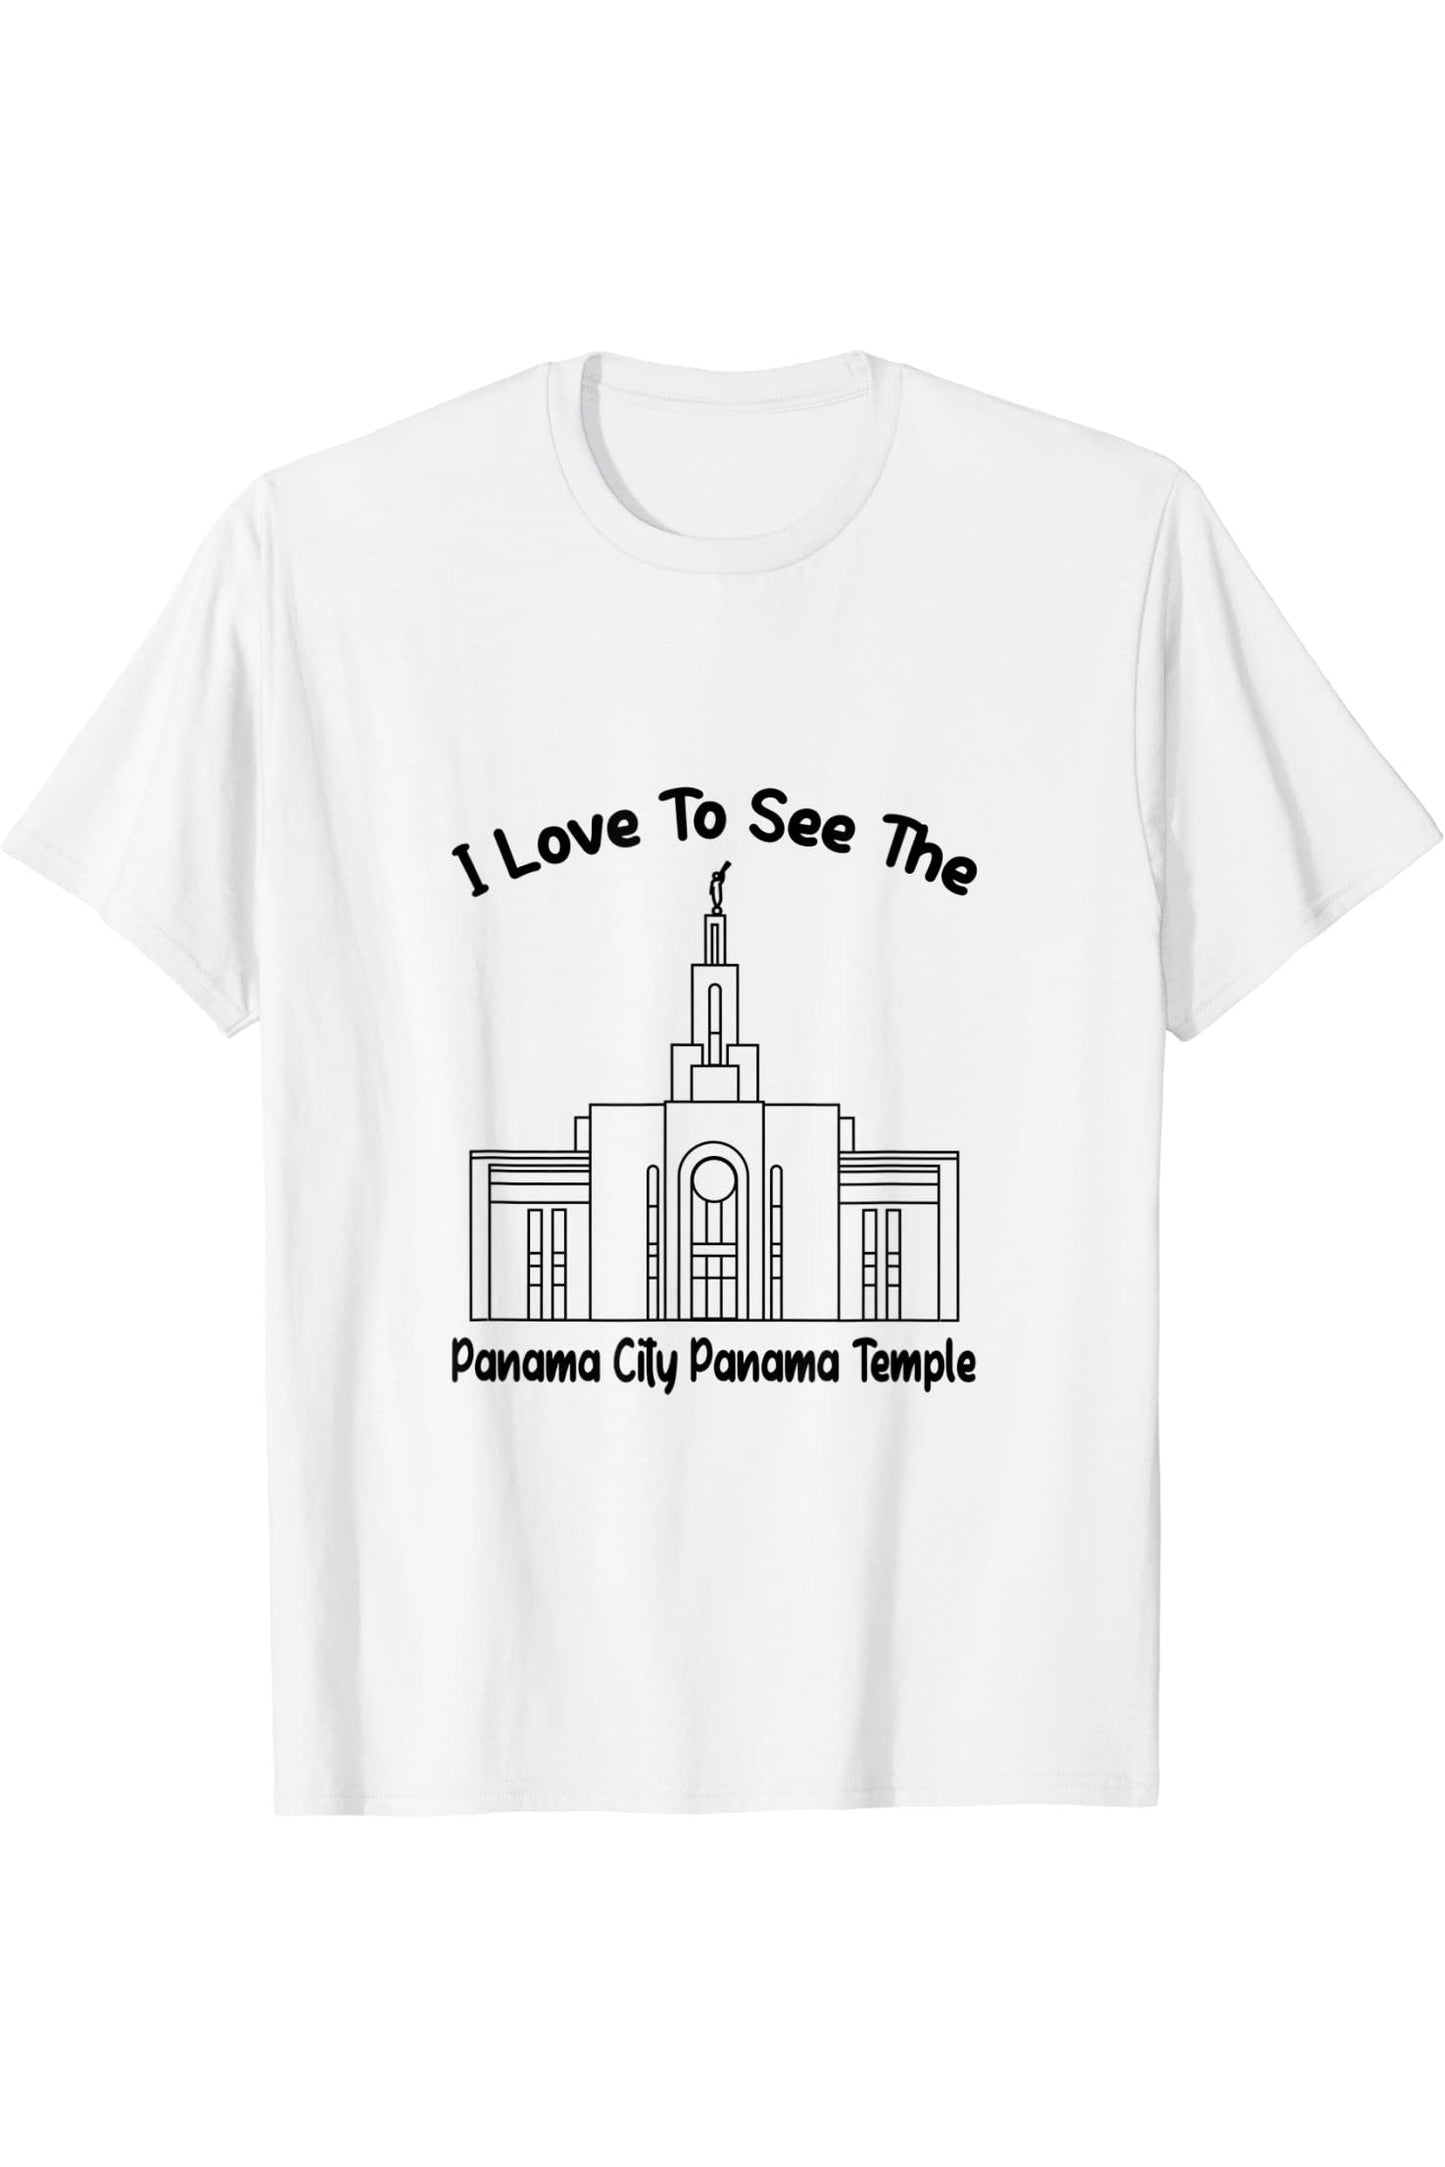 Panama City Panama Temple T-Shirt - Primary Style (English) US